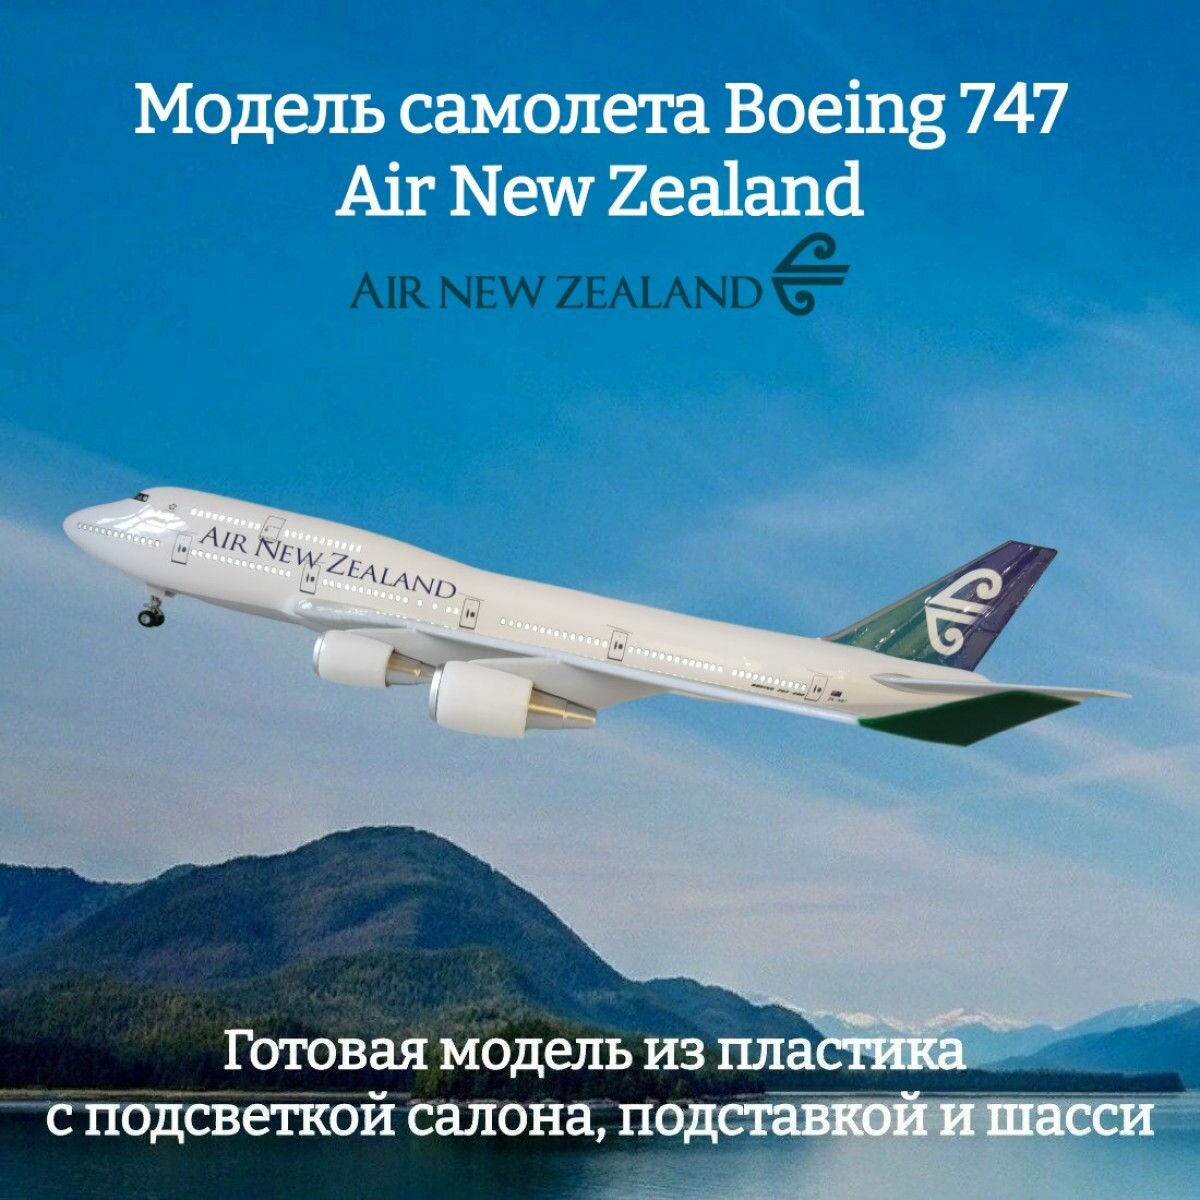 Модель самолета Boeing 747 Air New Zealand 1:160 (с подсветкой салона)